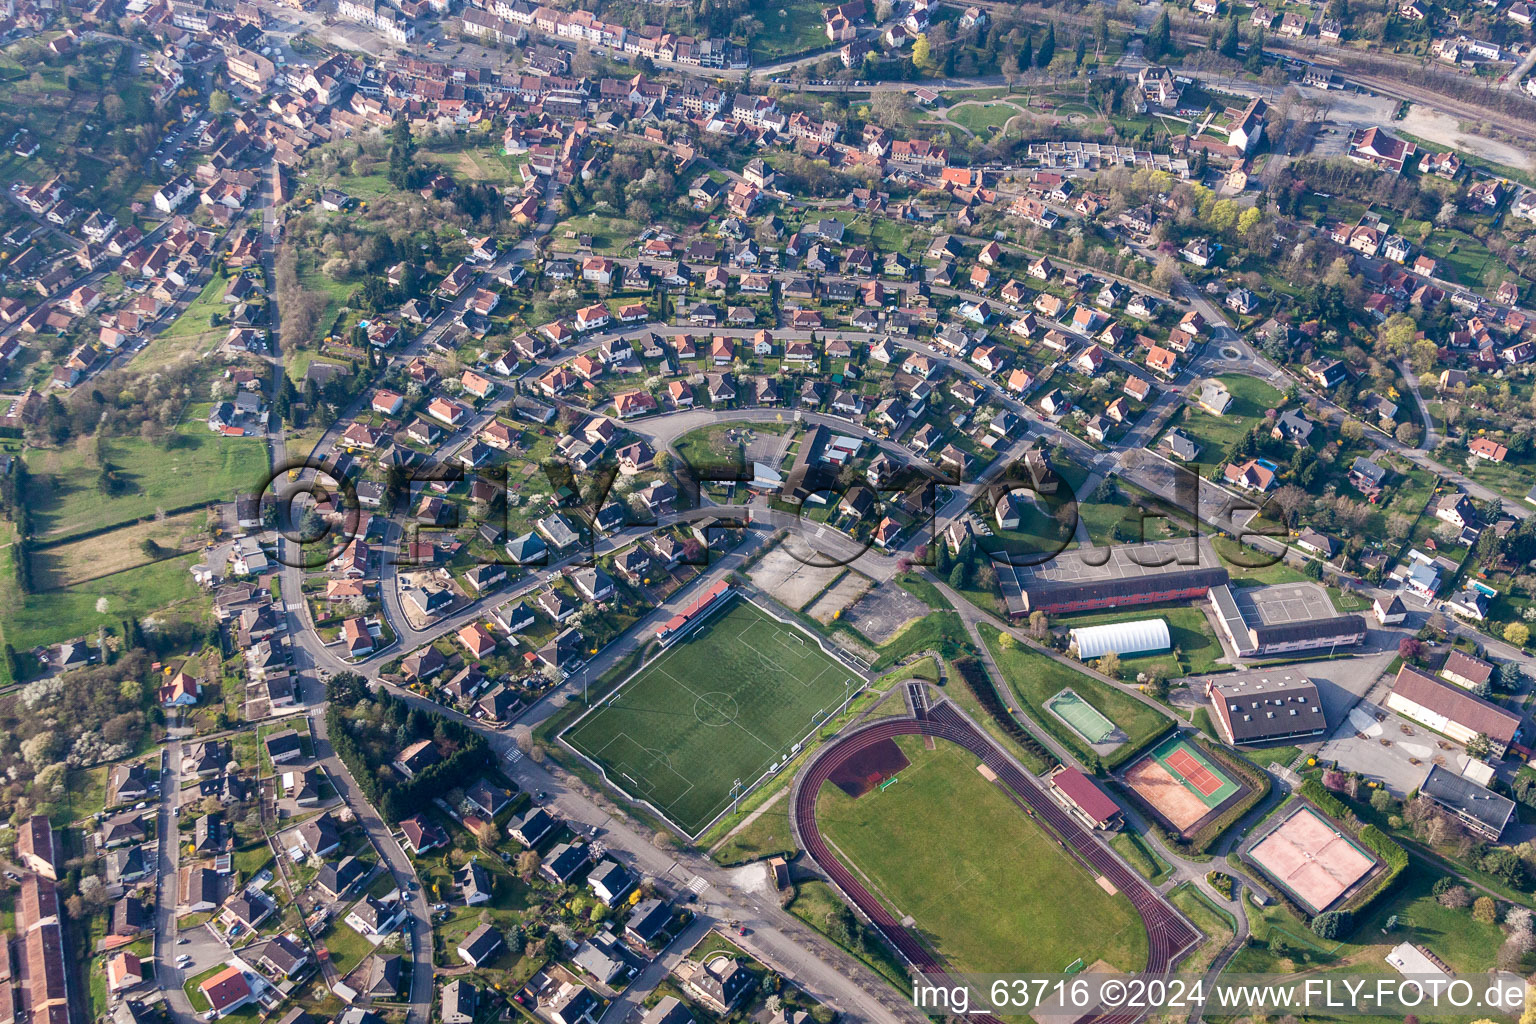 Ensemble der Sportplatzanlagen terrain de football synthètique in Niederbronn-les-Bains in Grand Est im Bundesland Bas-Rhin, Frankreich